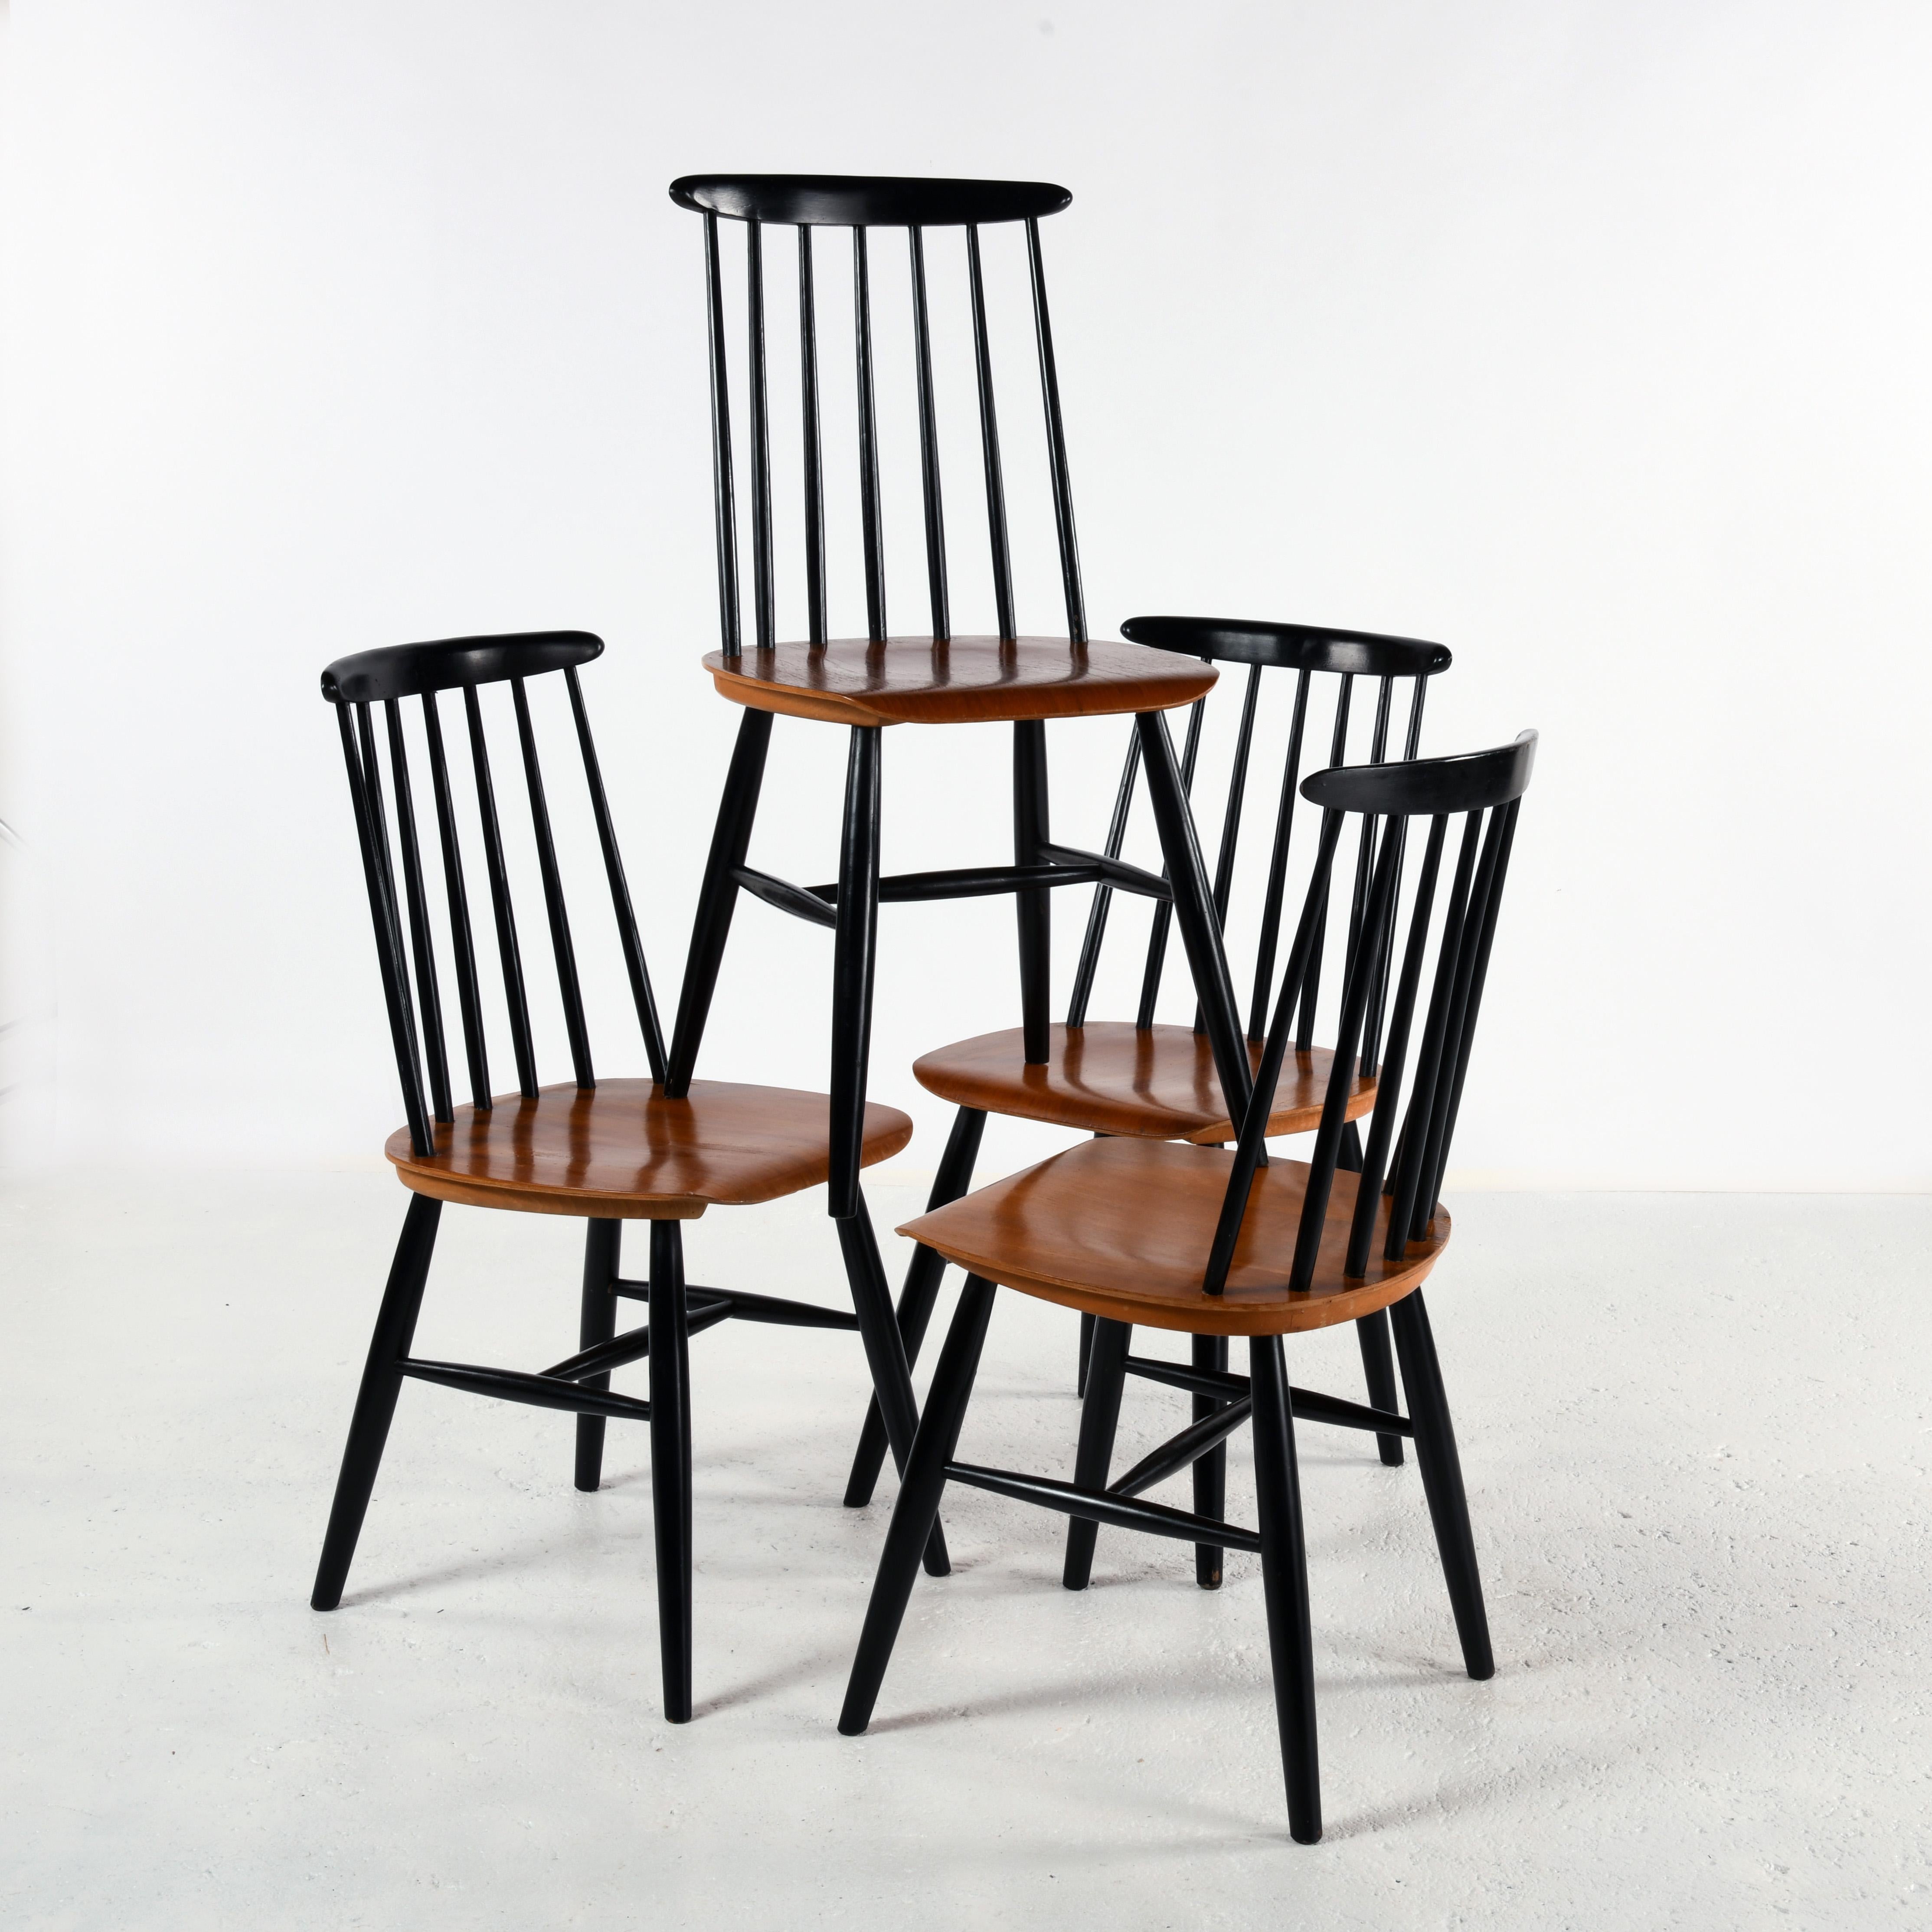 Finnish 4 Fanett chair designed by Ilmari Tapiovaara